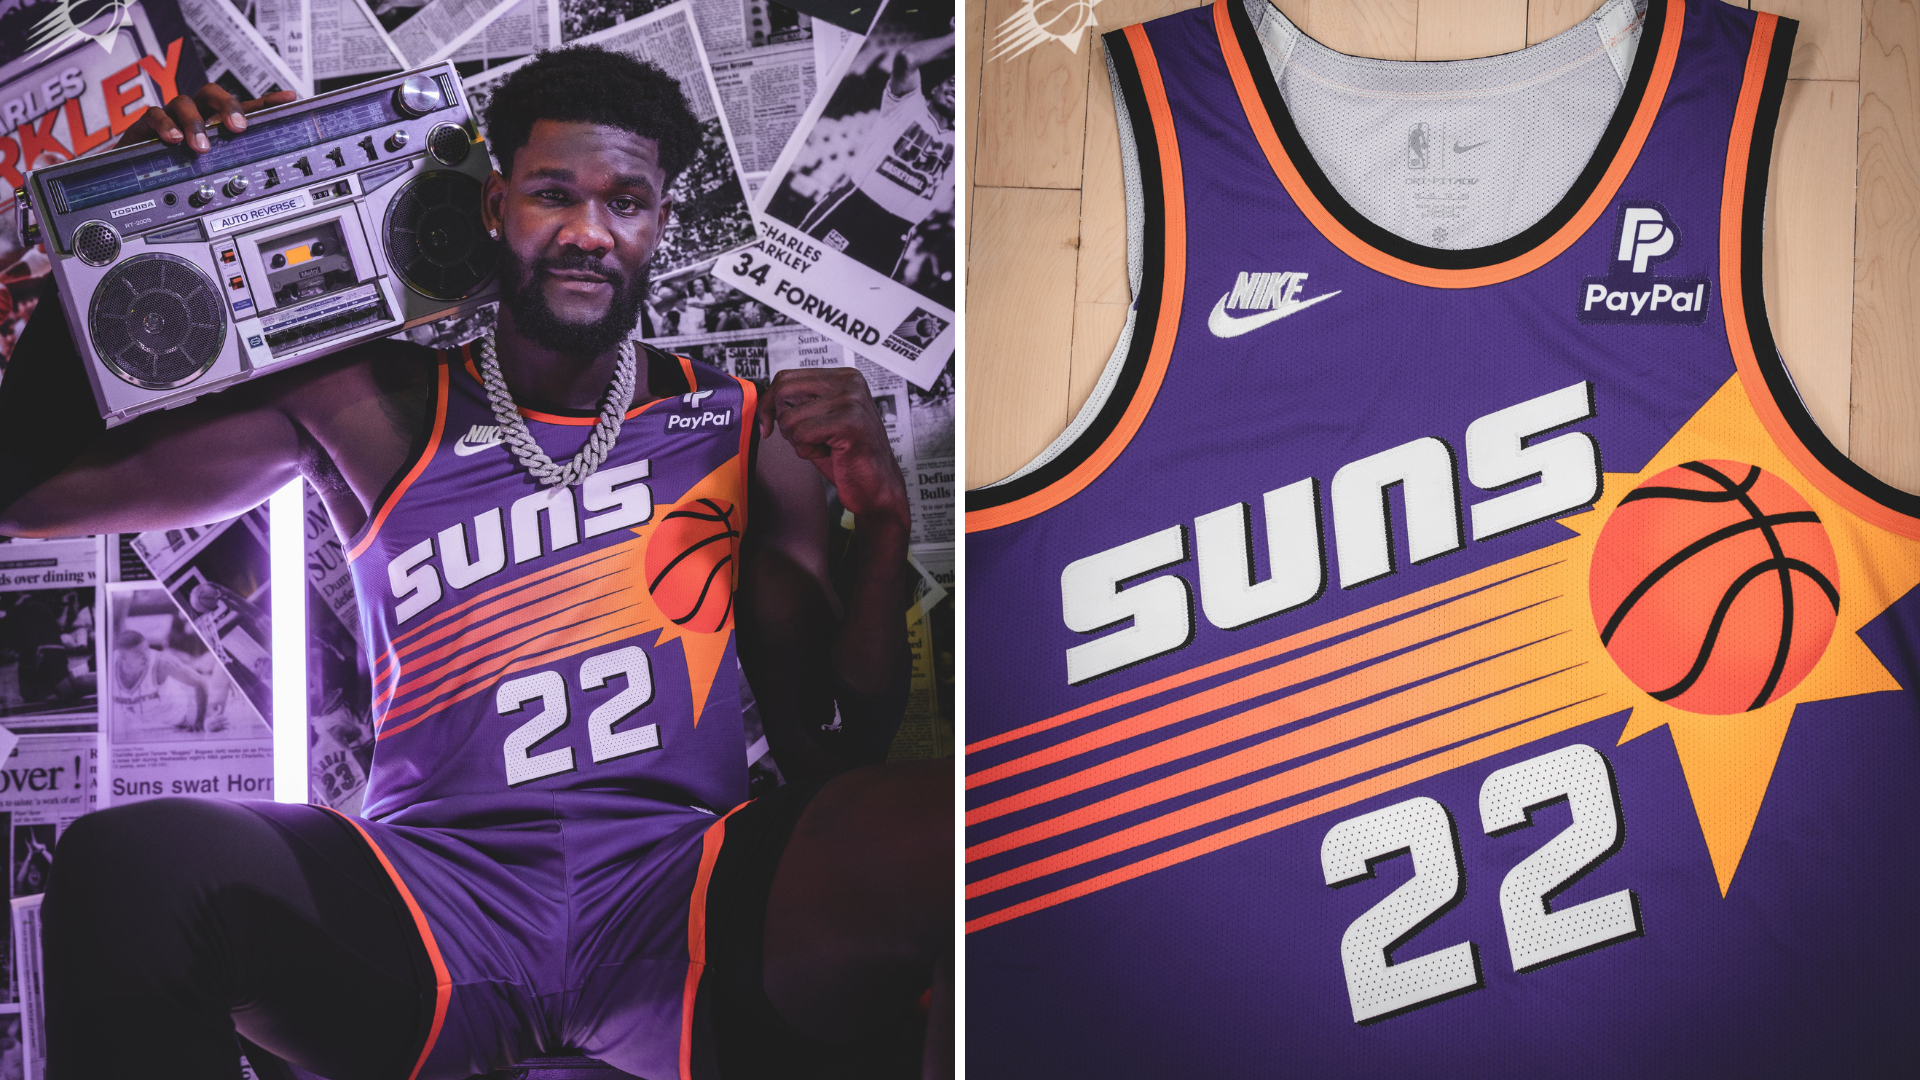 PayPal to advertise on Phoenix Suns jerseys - Phoenix Business Journal